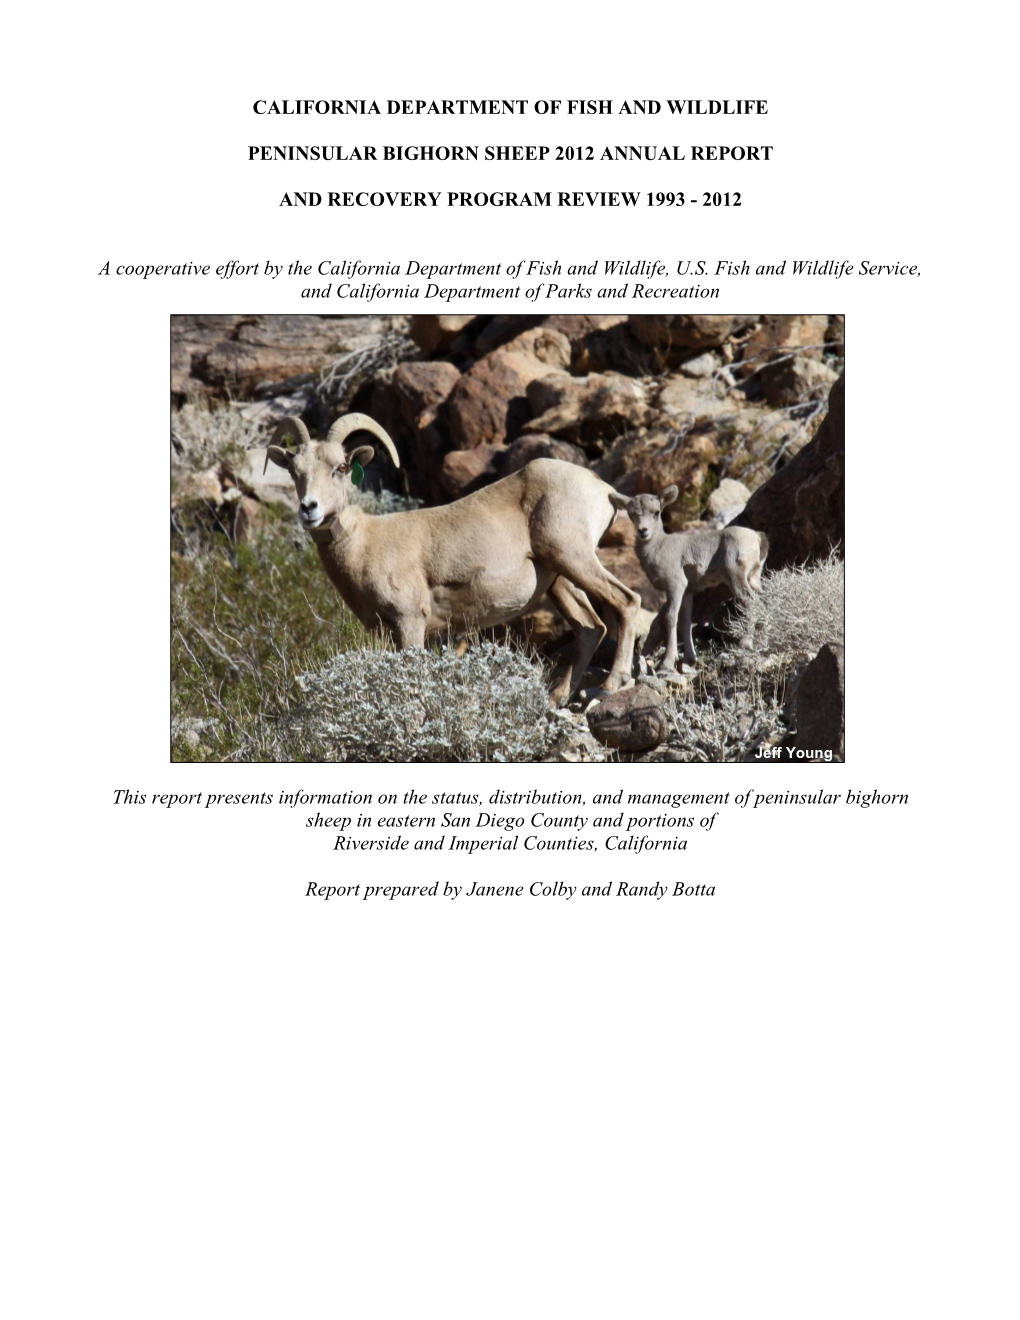 Peninsular Bighorn Sheep Recovery 2012 Annual Report